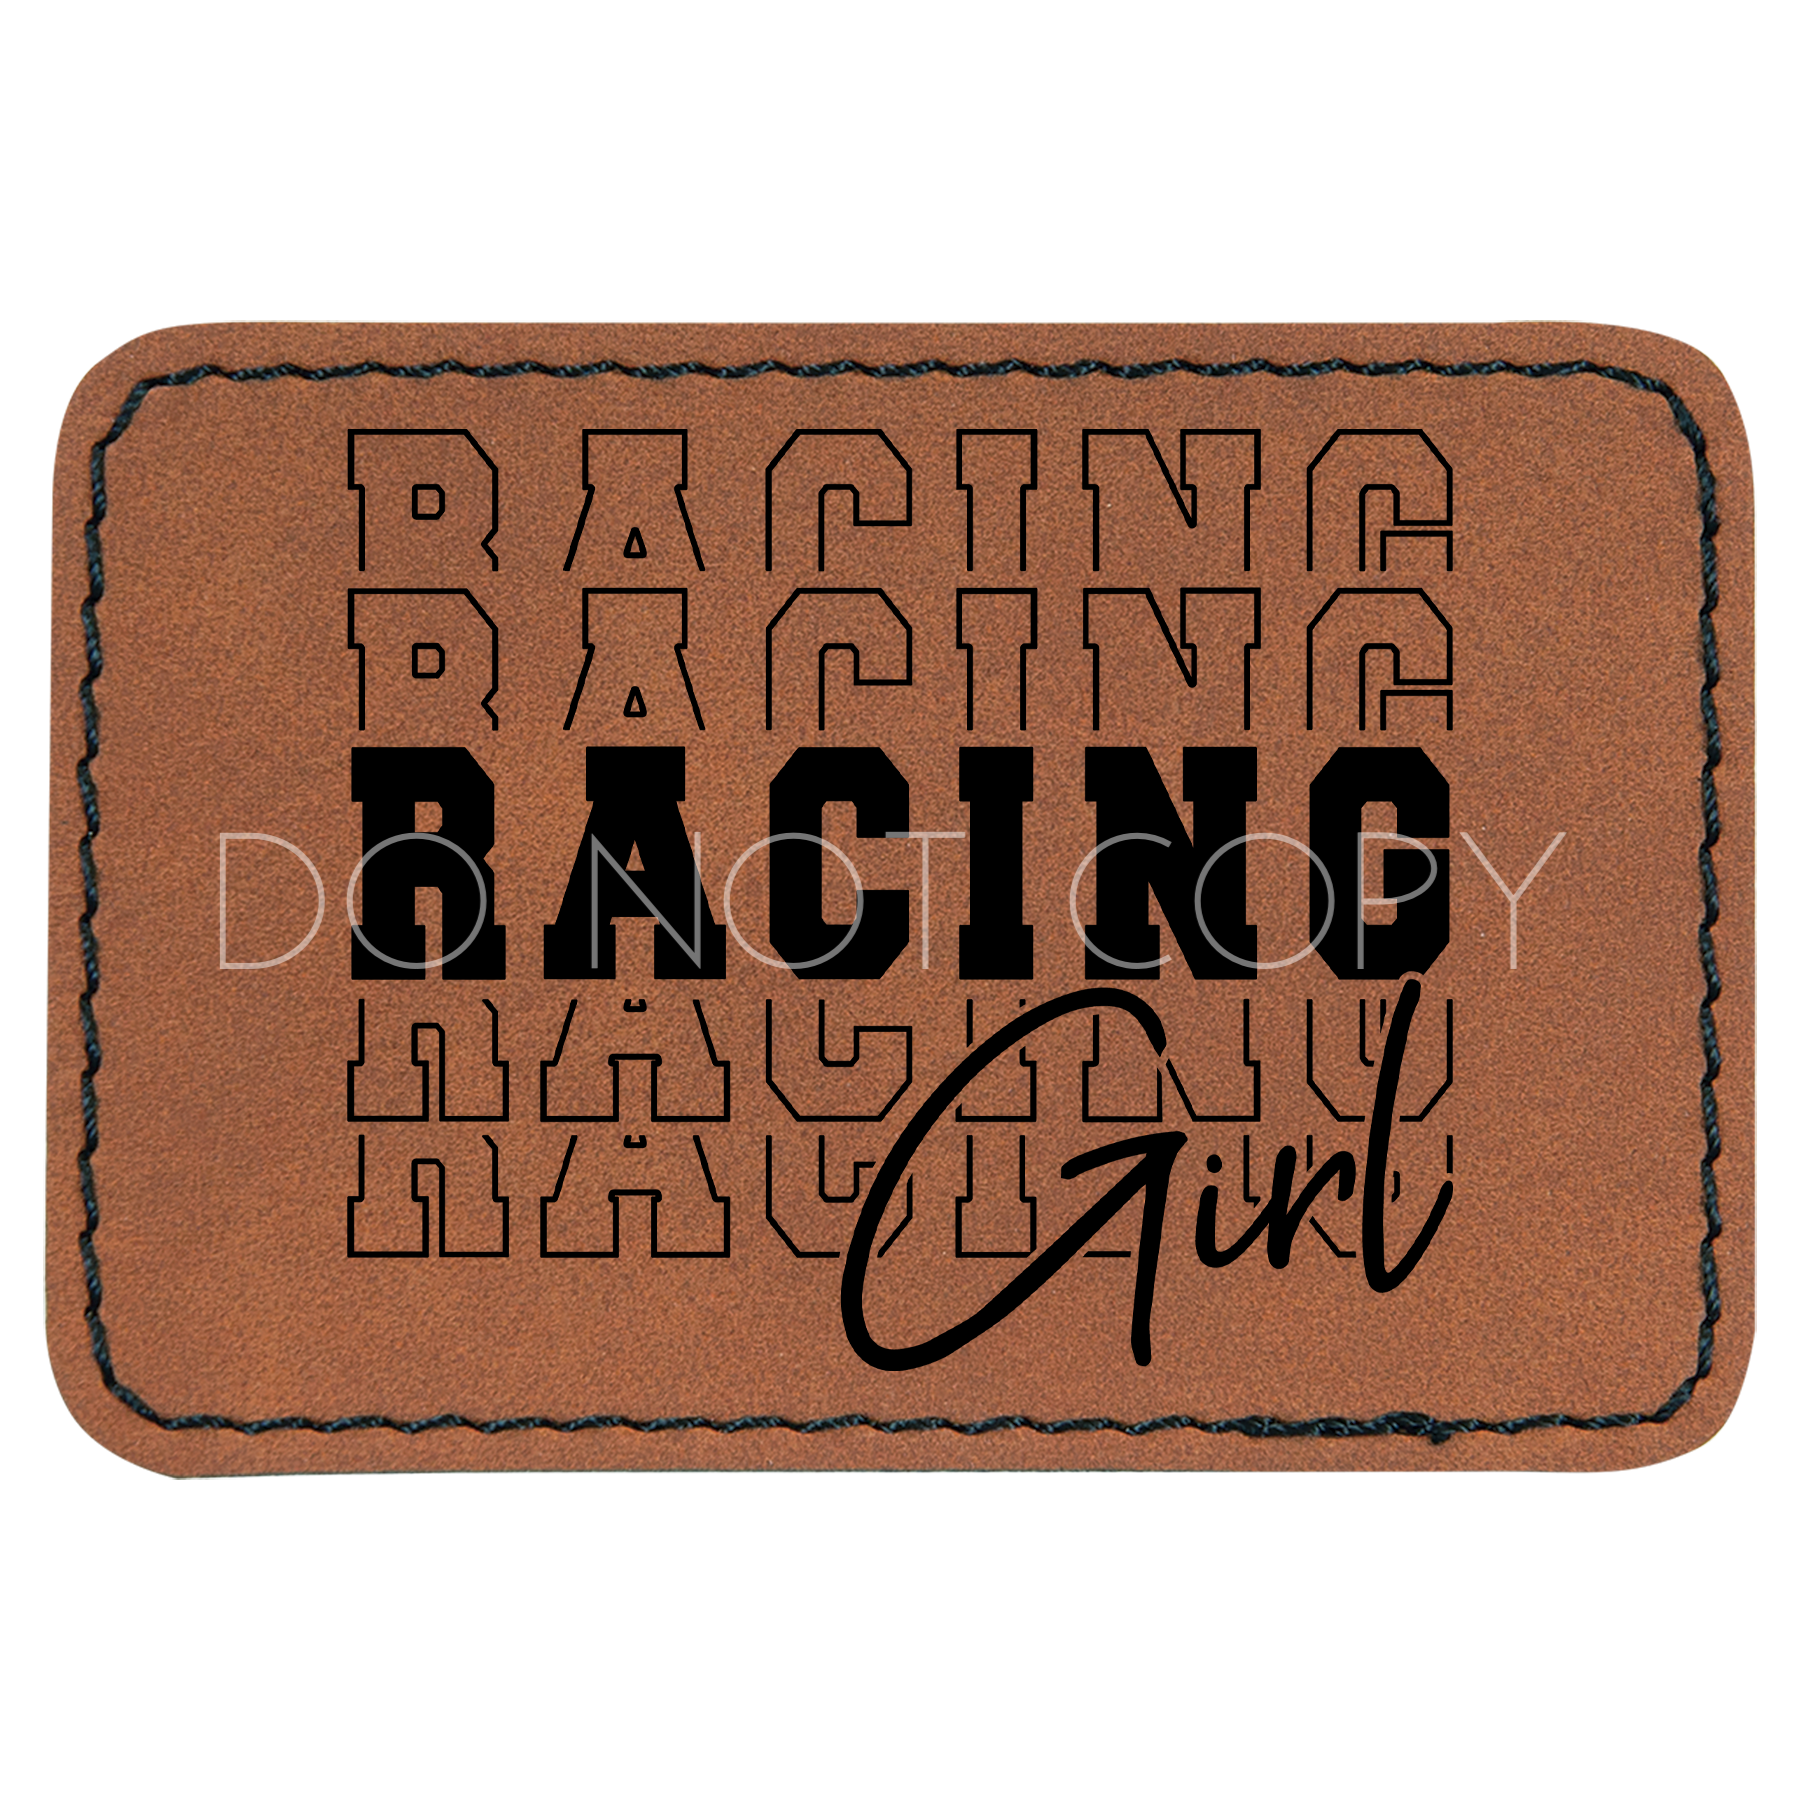 Racing Girl Patch